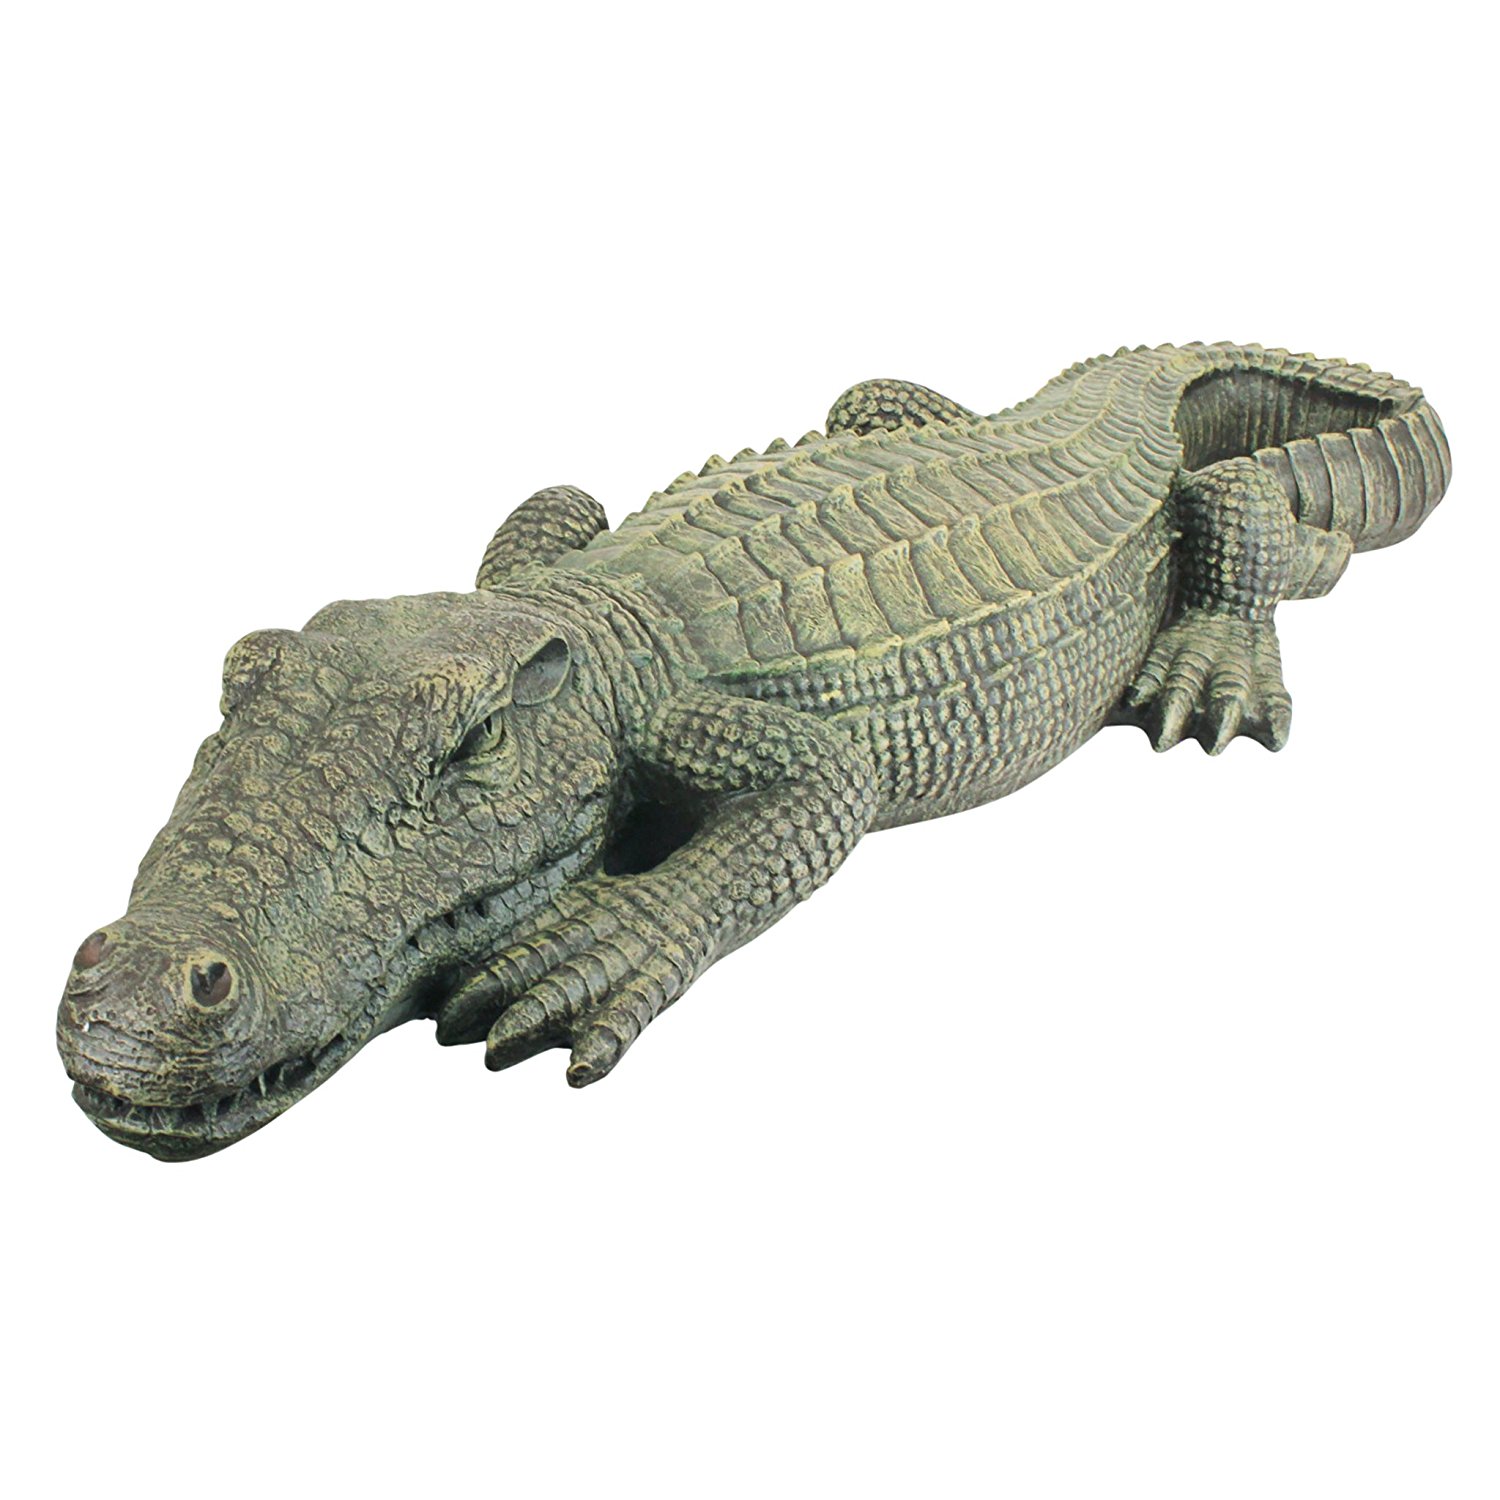 Amazon.com : Design Toscano The Swamp Beast Crocodile Garden ...